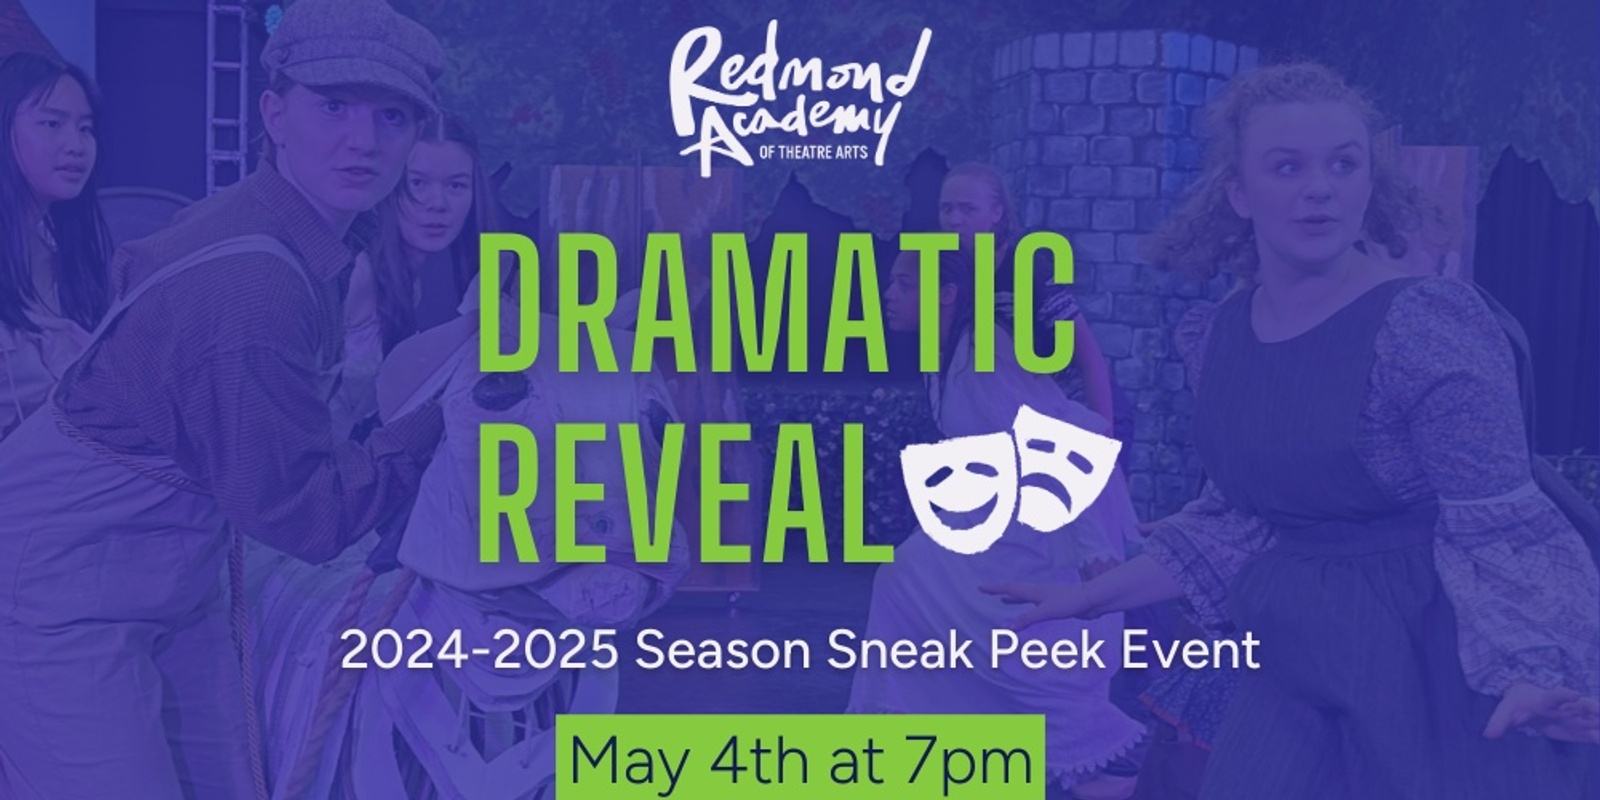 Banner image for Redmond Academy - Dramatic Reveal - 2025-2025 Season Showcase